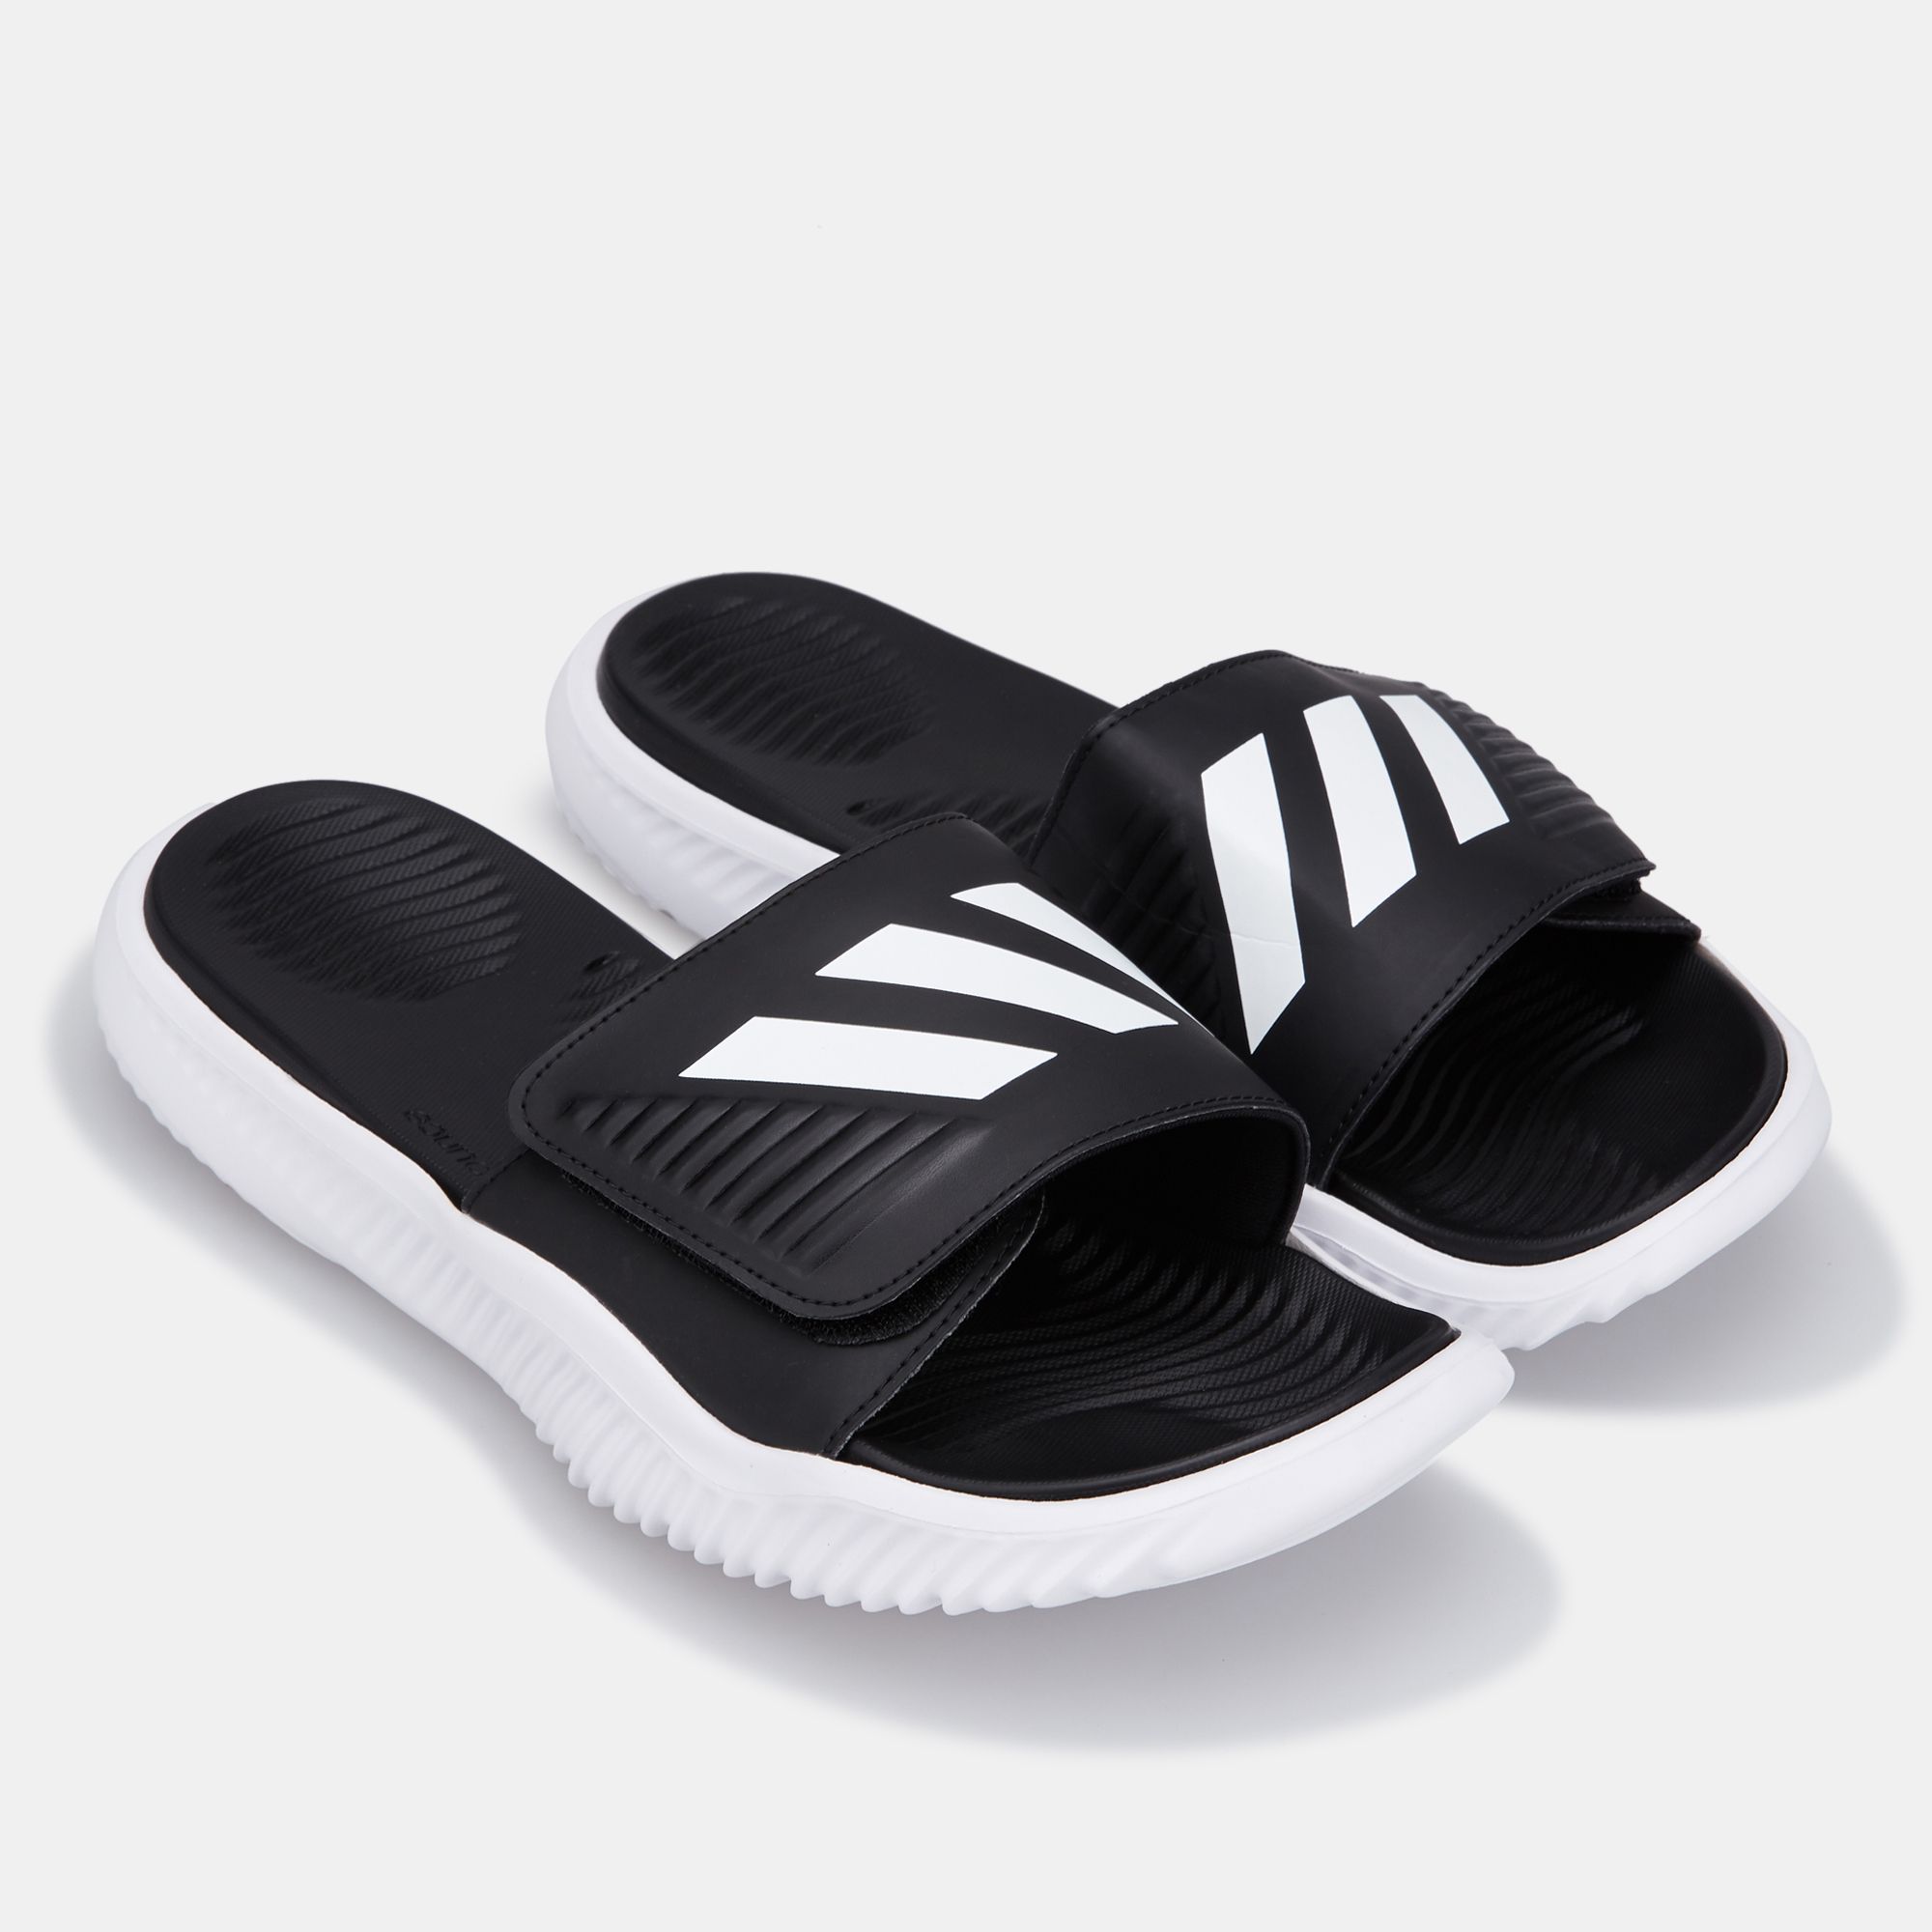 adidas alphabounce slide sandals online